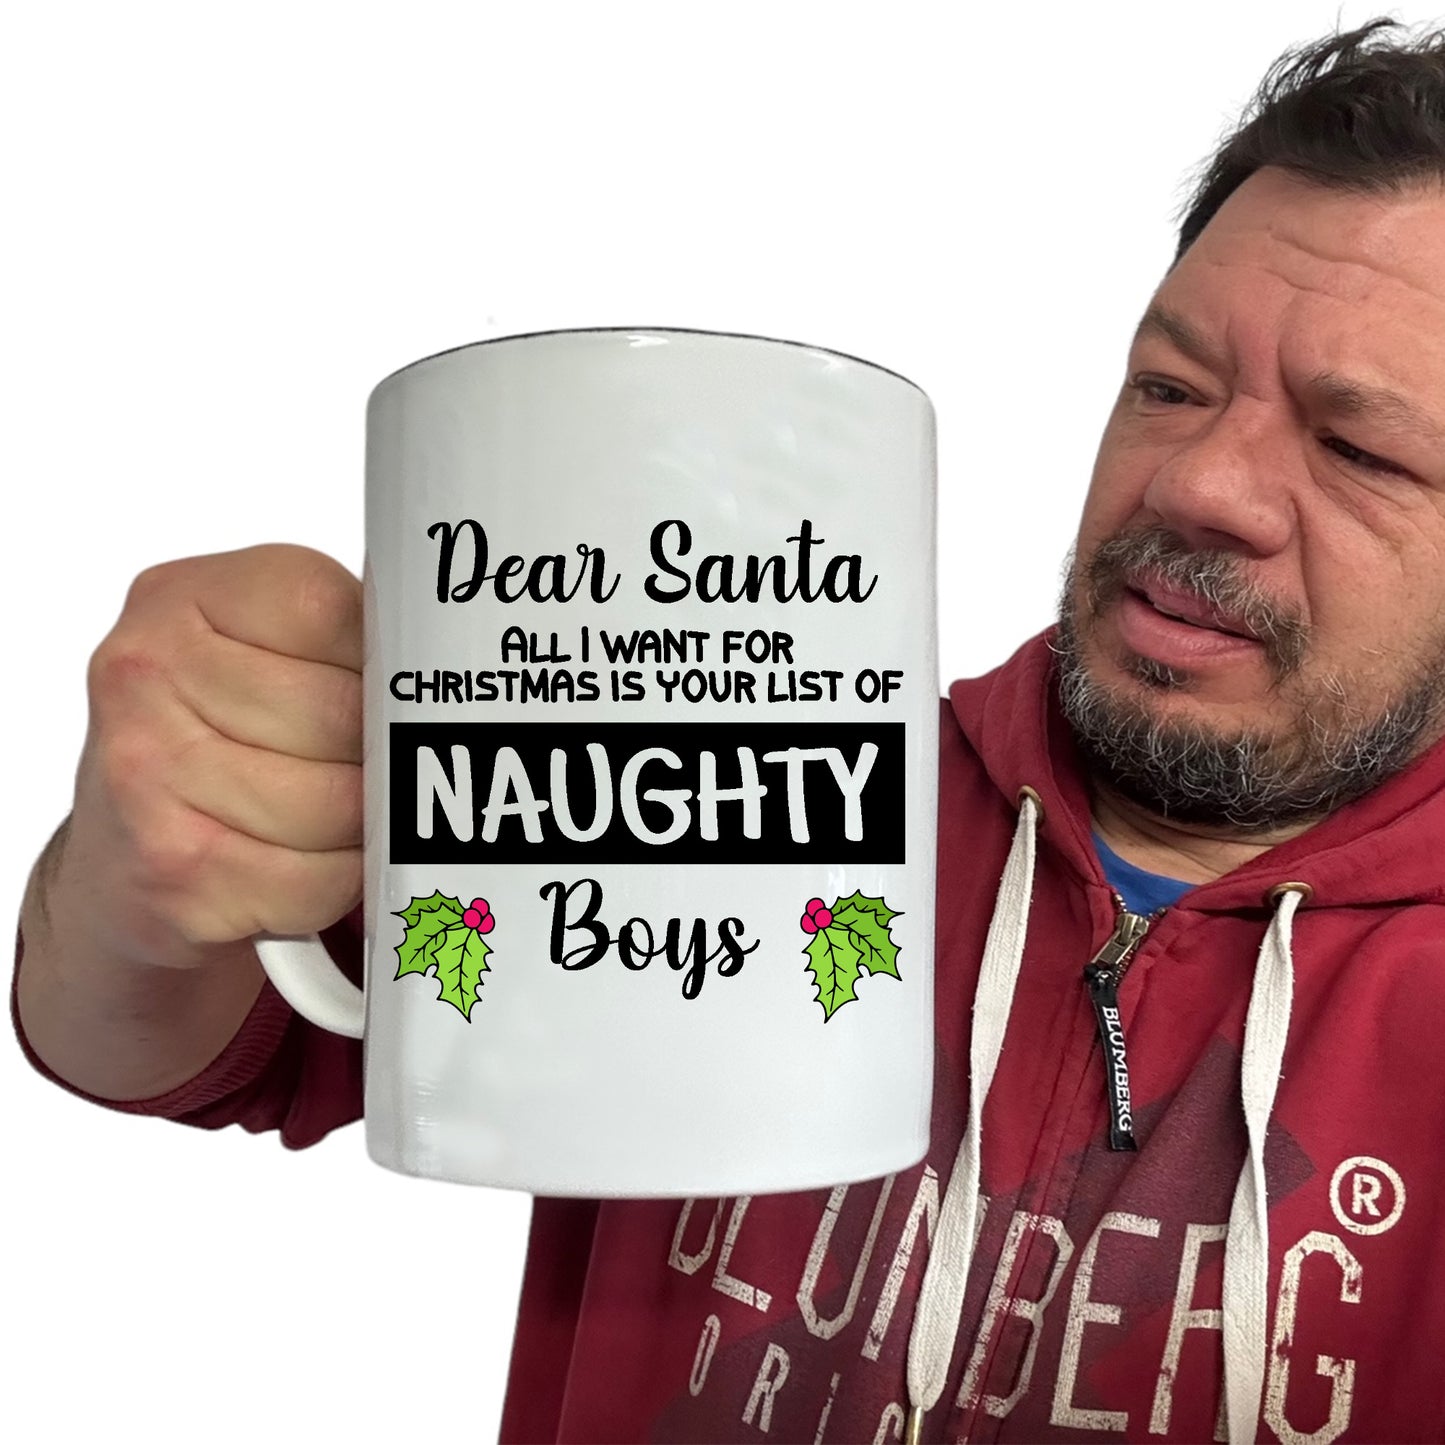 The Christmas Hub - Christmas Xmas Dear Santa All I Want Naughty Boys - Funny Giant 2 Litre Mug